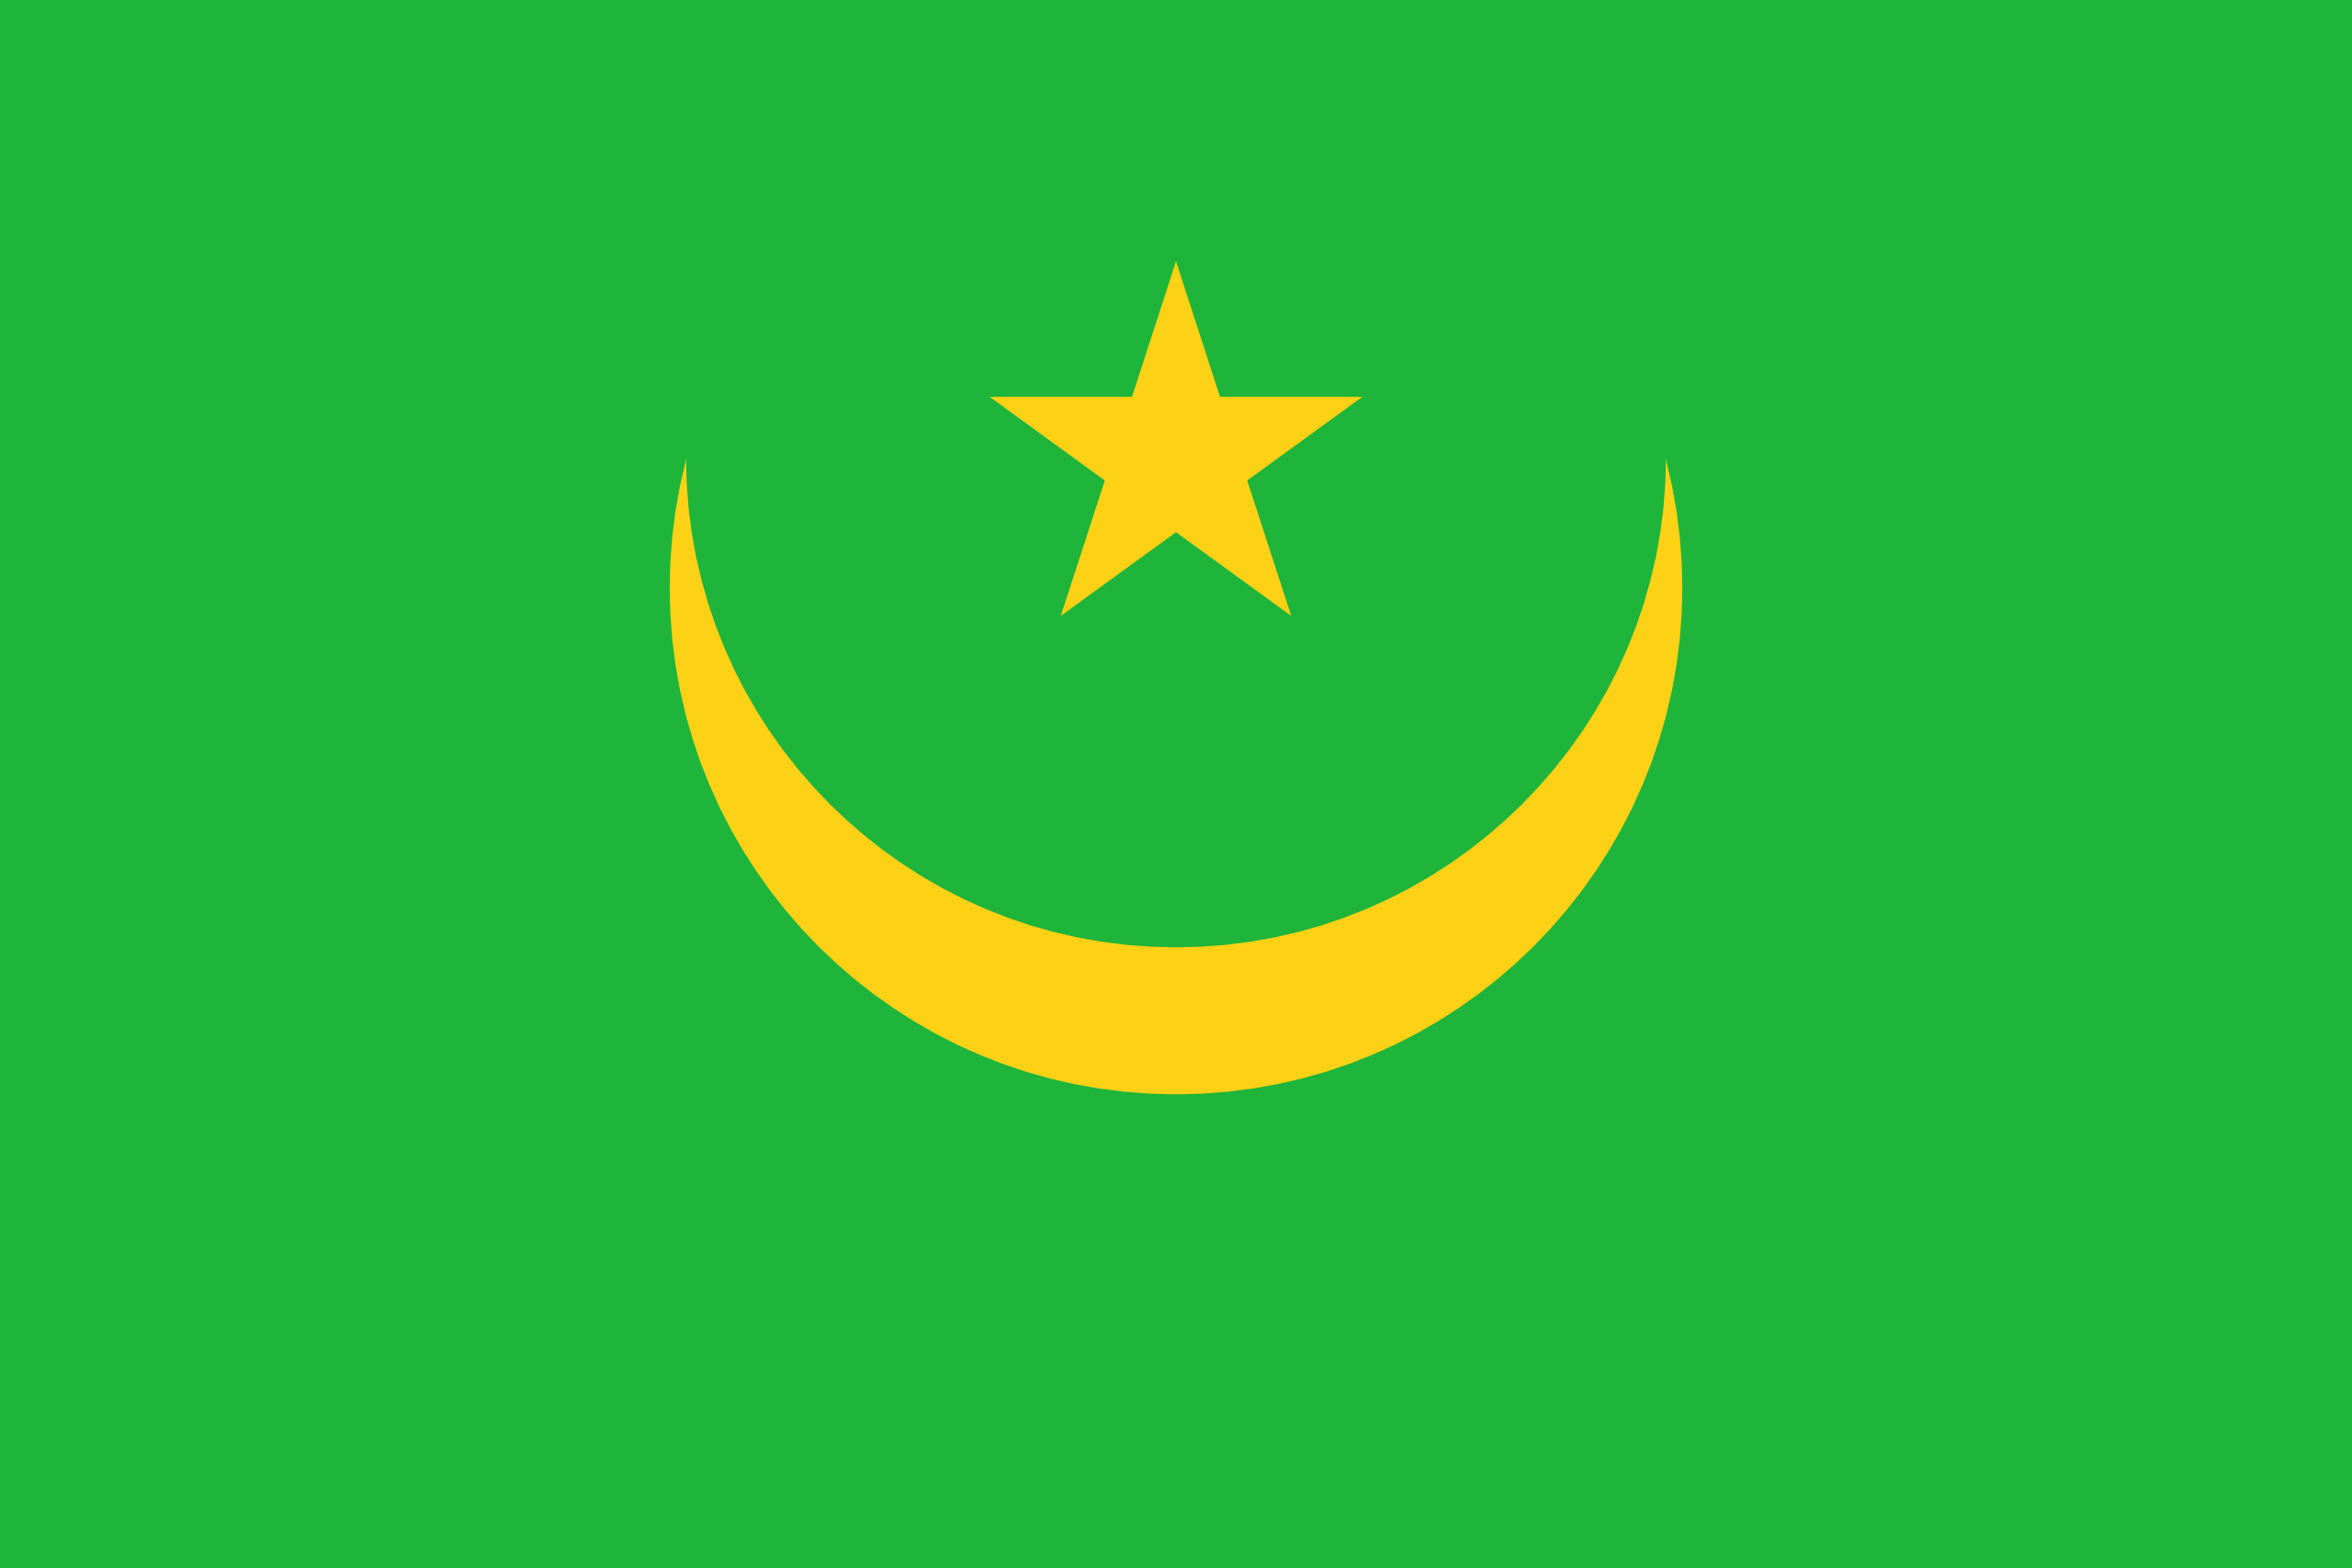 Mauritania's flag